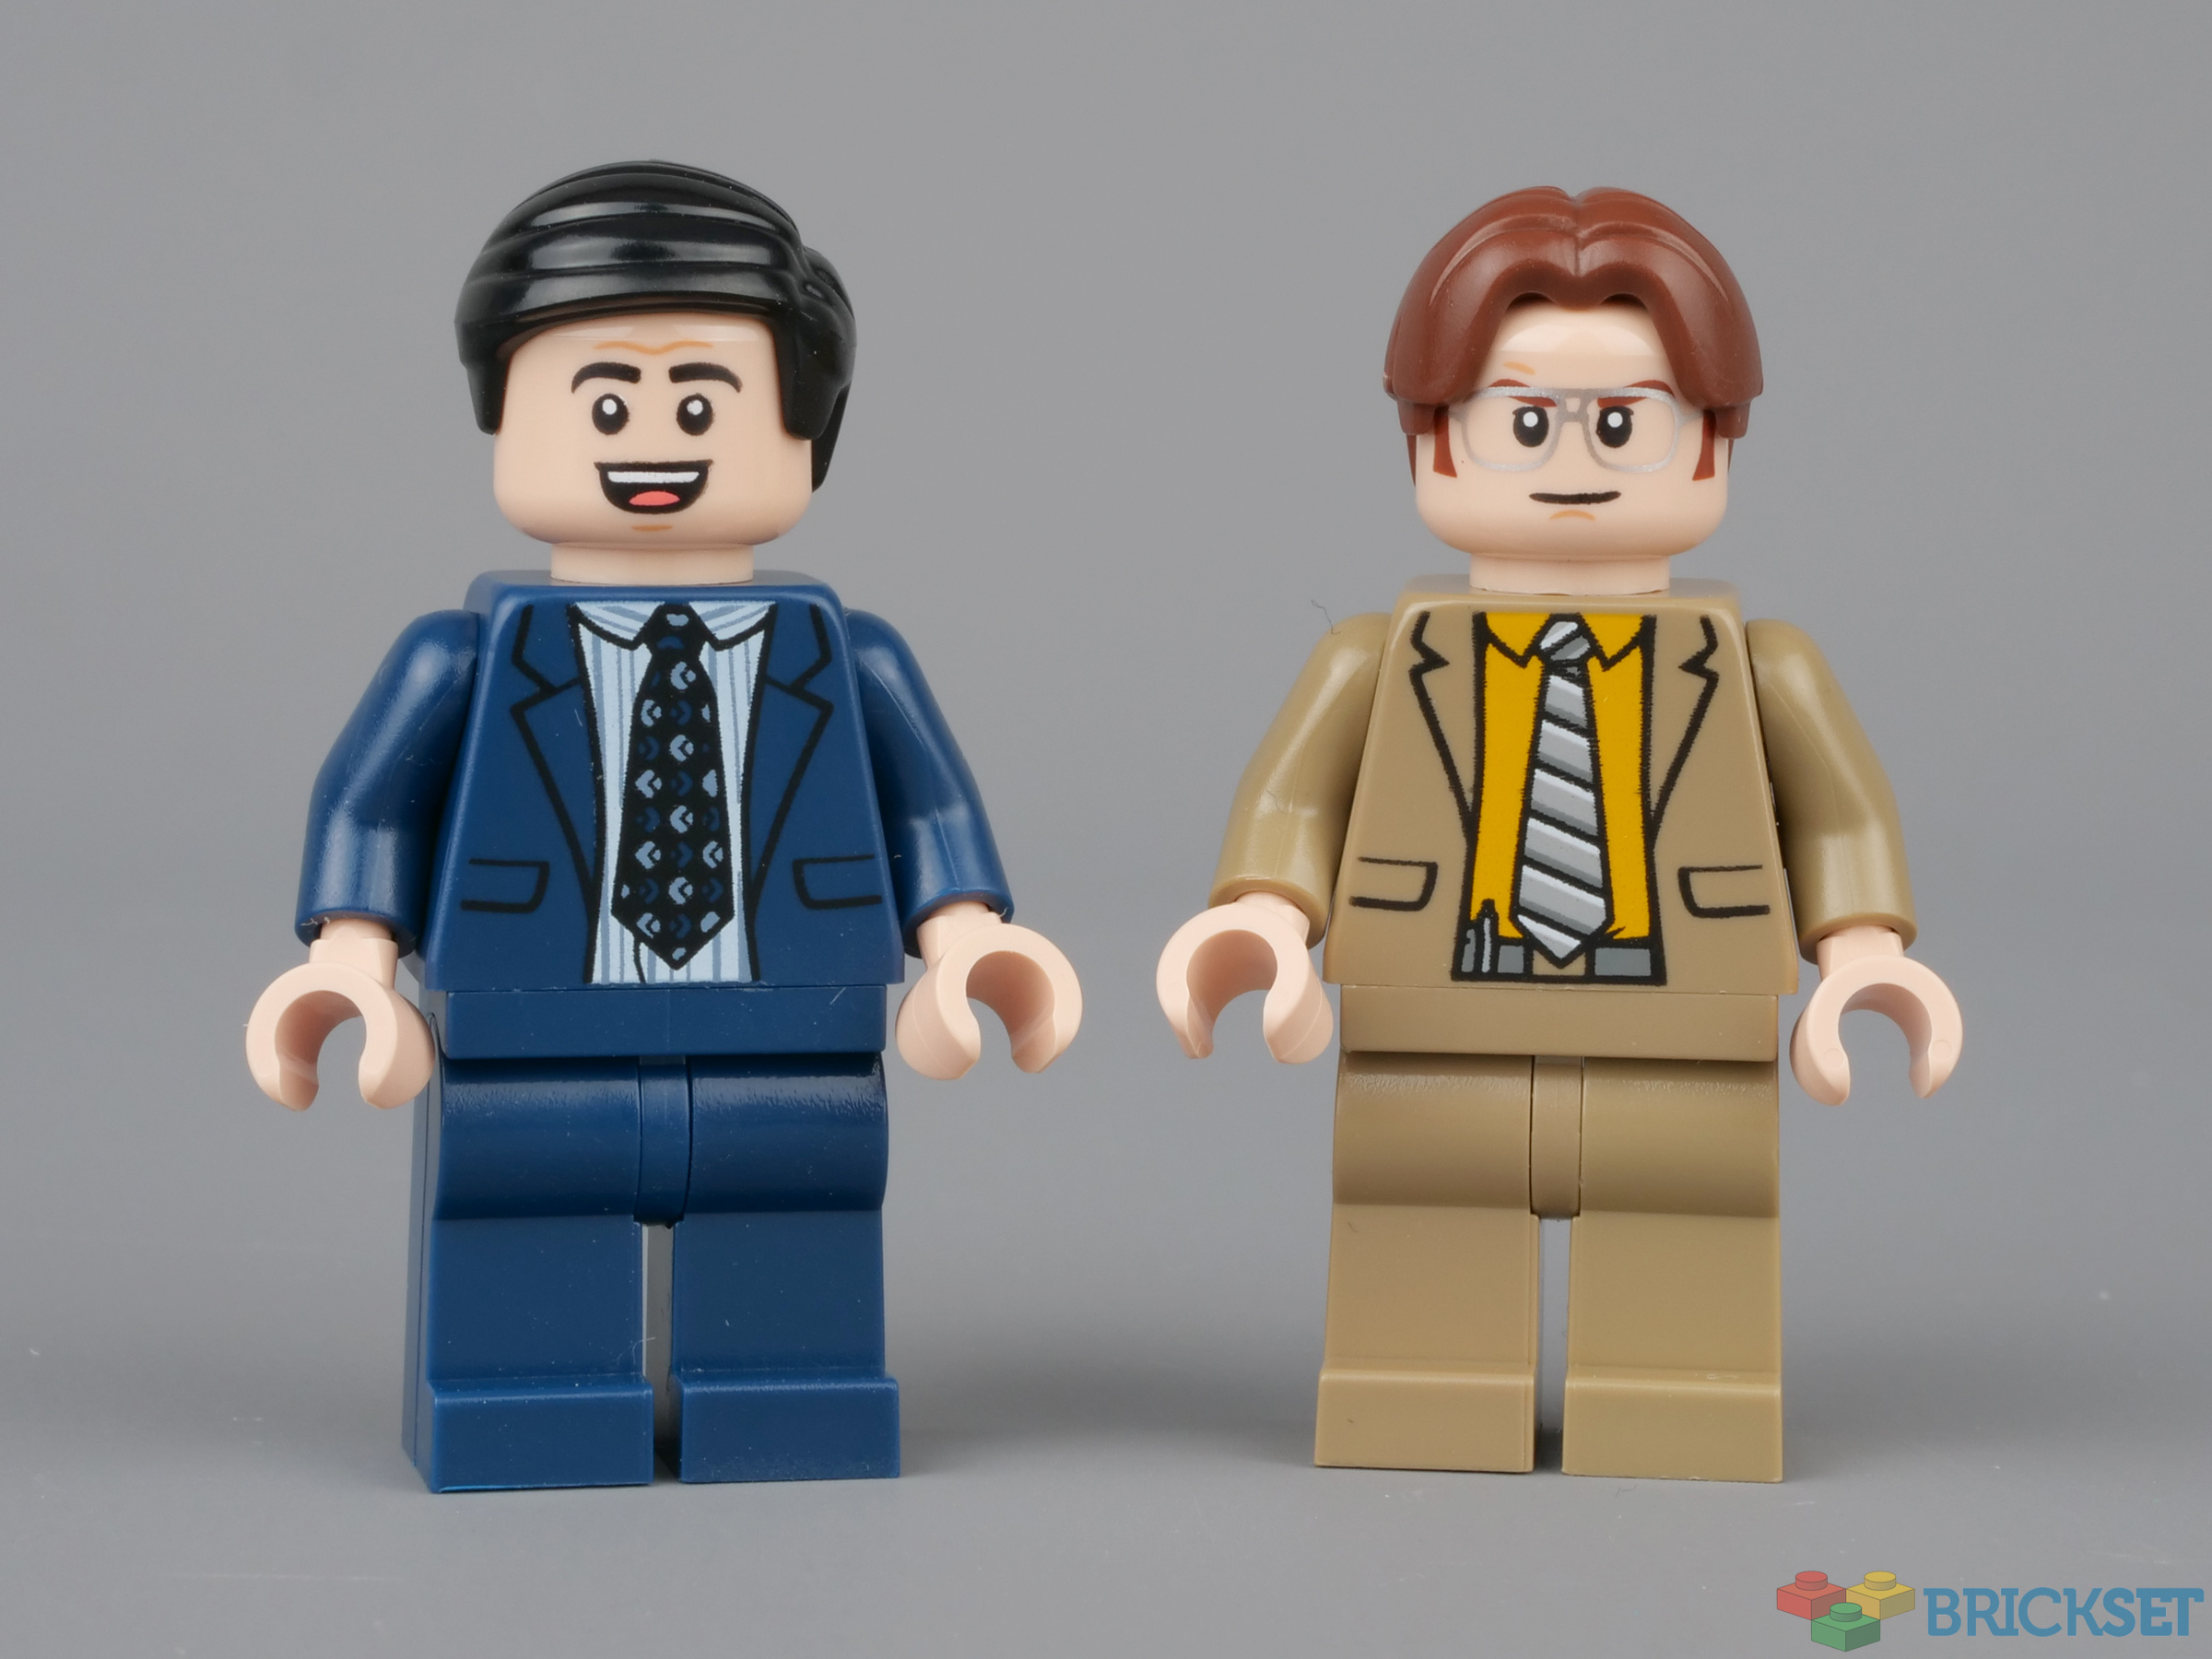 Lego re-creates The Office's Dunder Mifflin Scranton branch